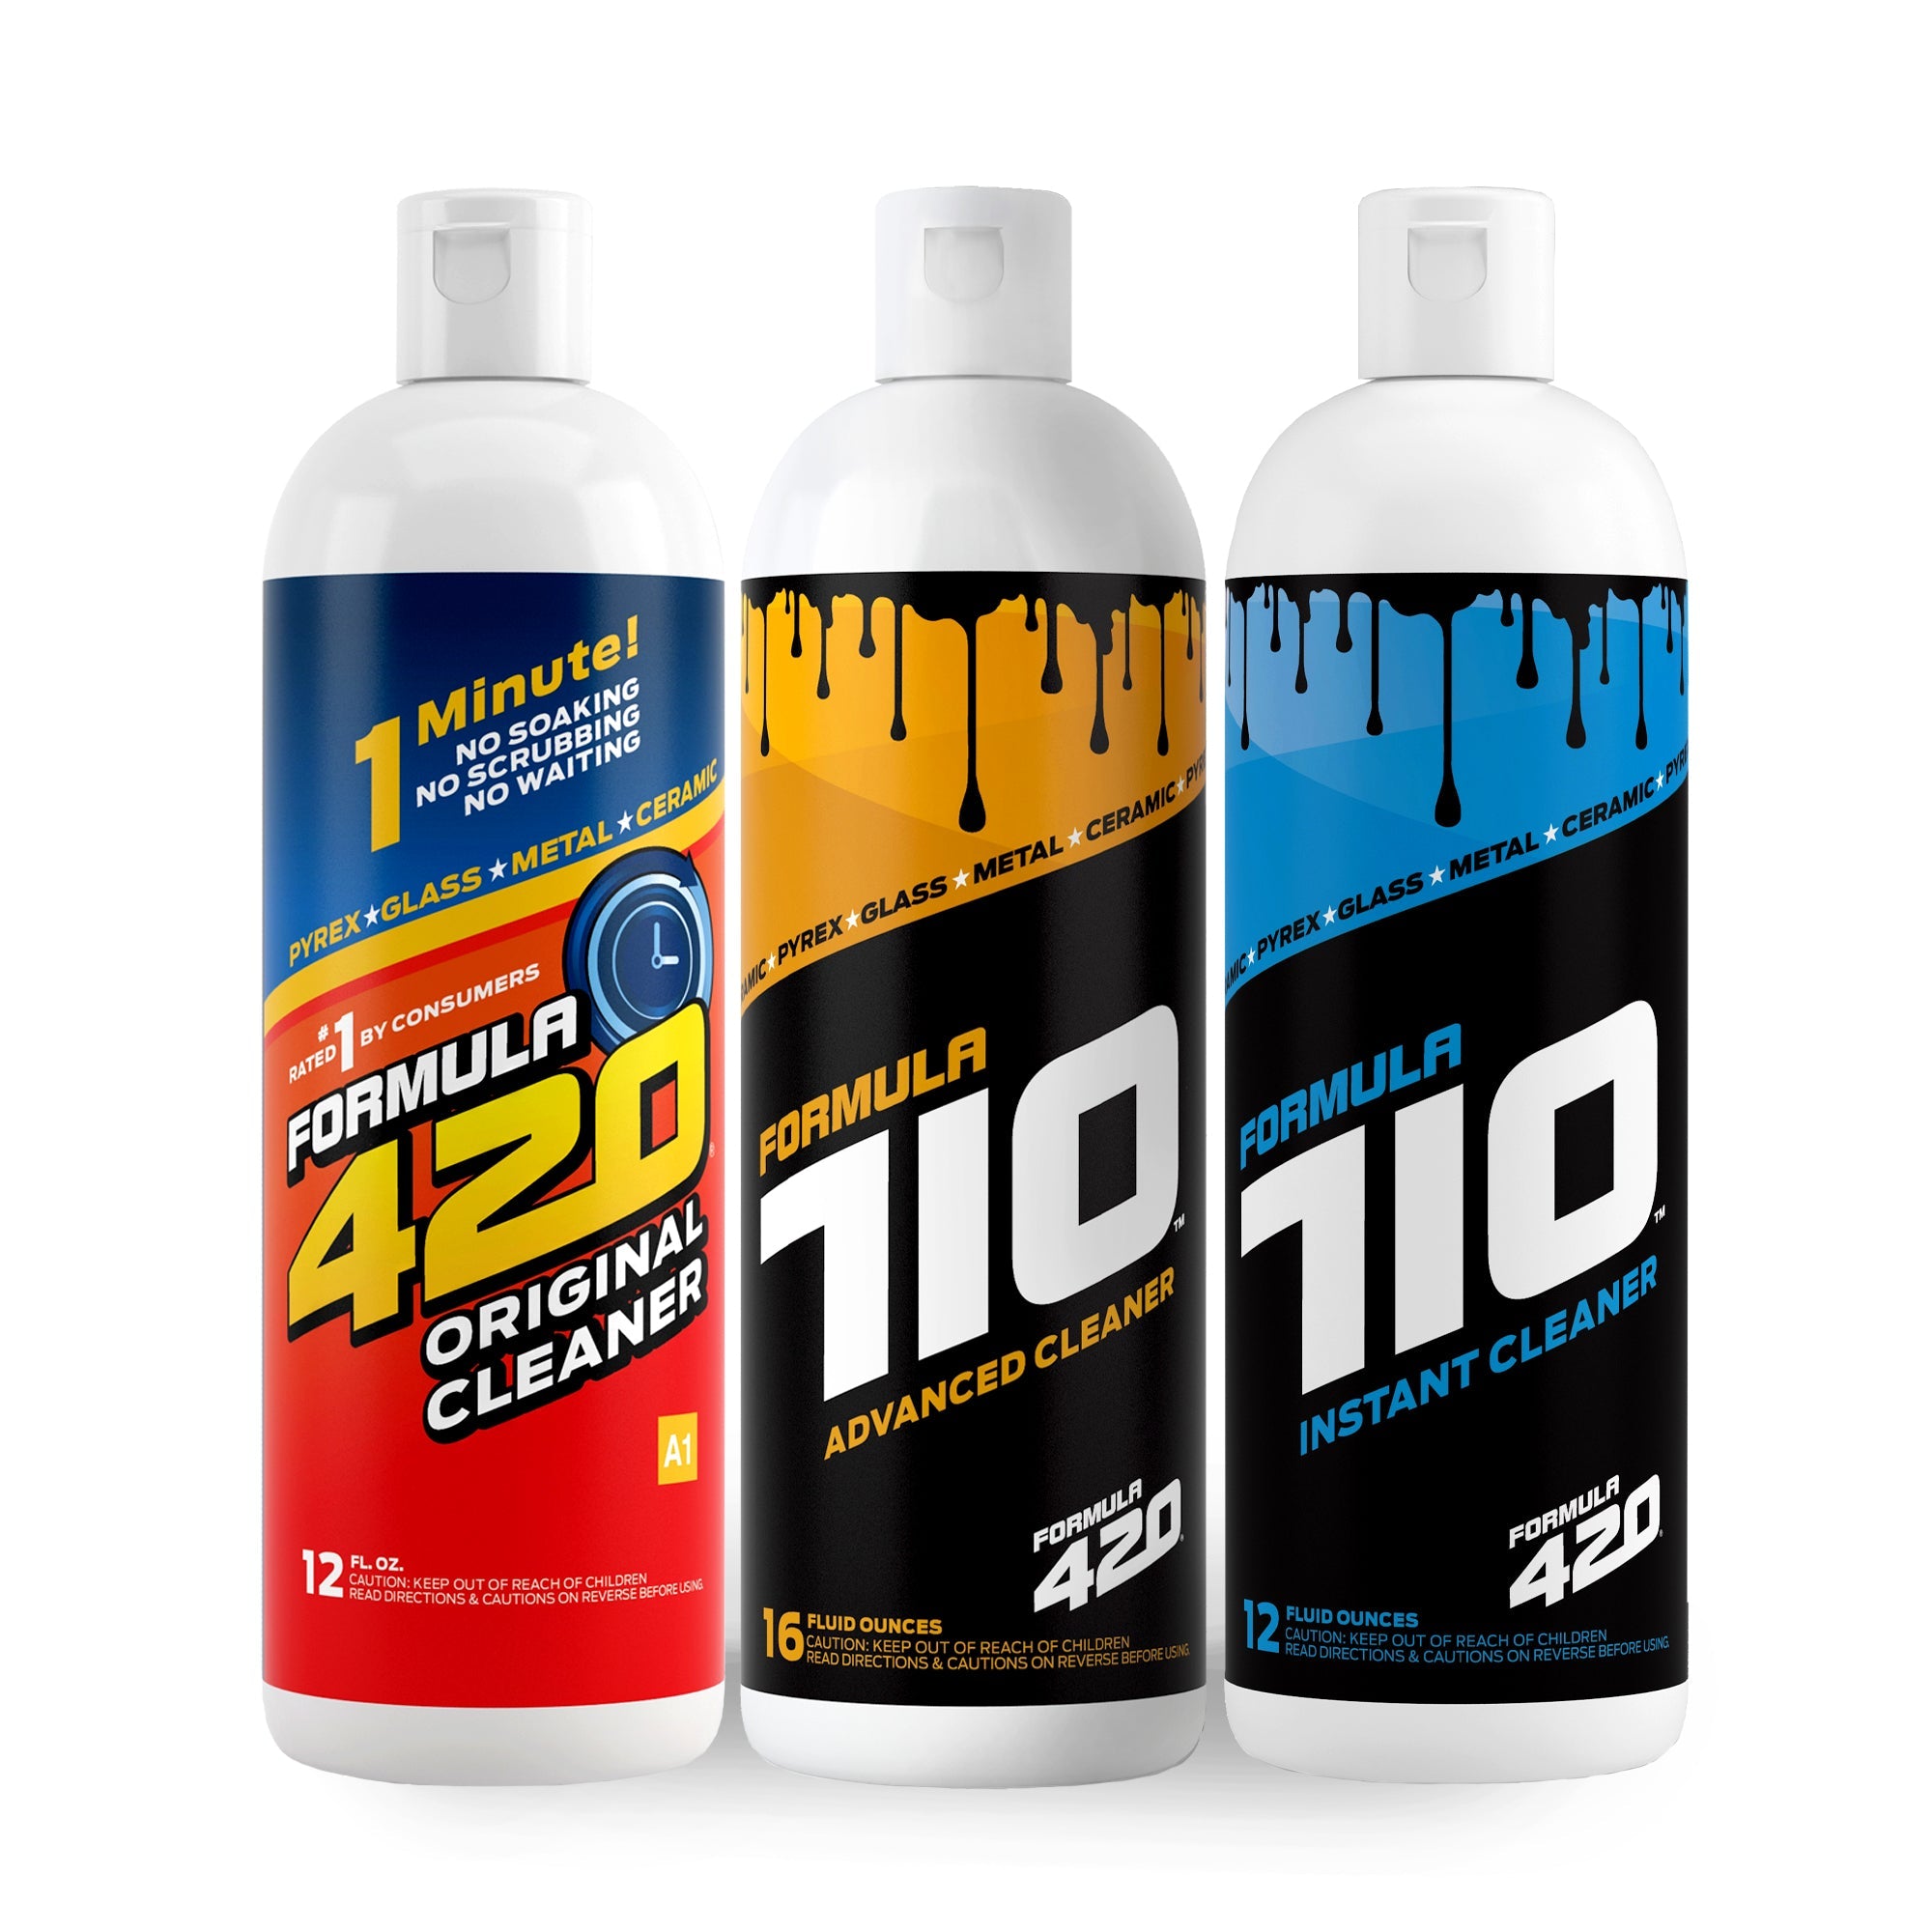 A1 - Formula 420 Original Cleaner / C1 - Formula 710 Advanced